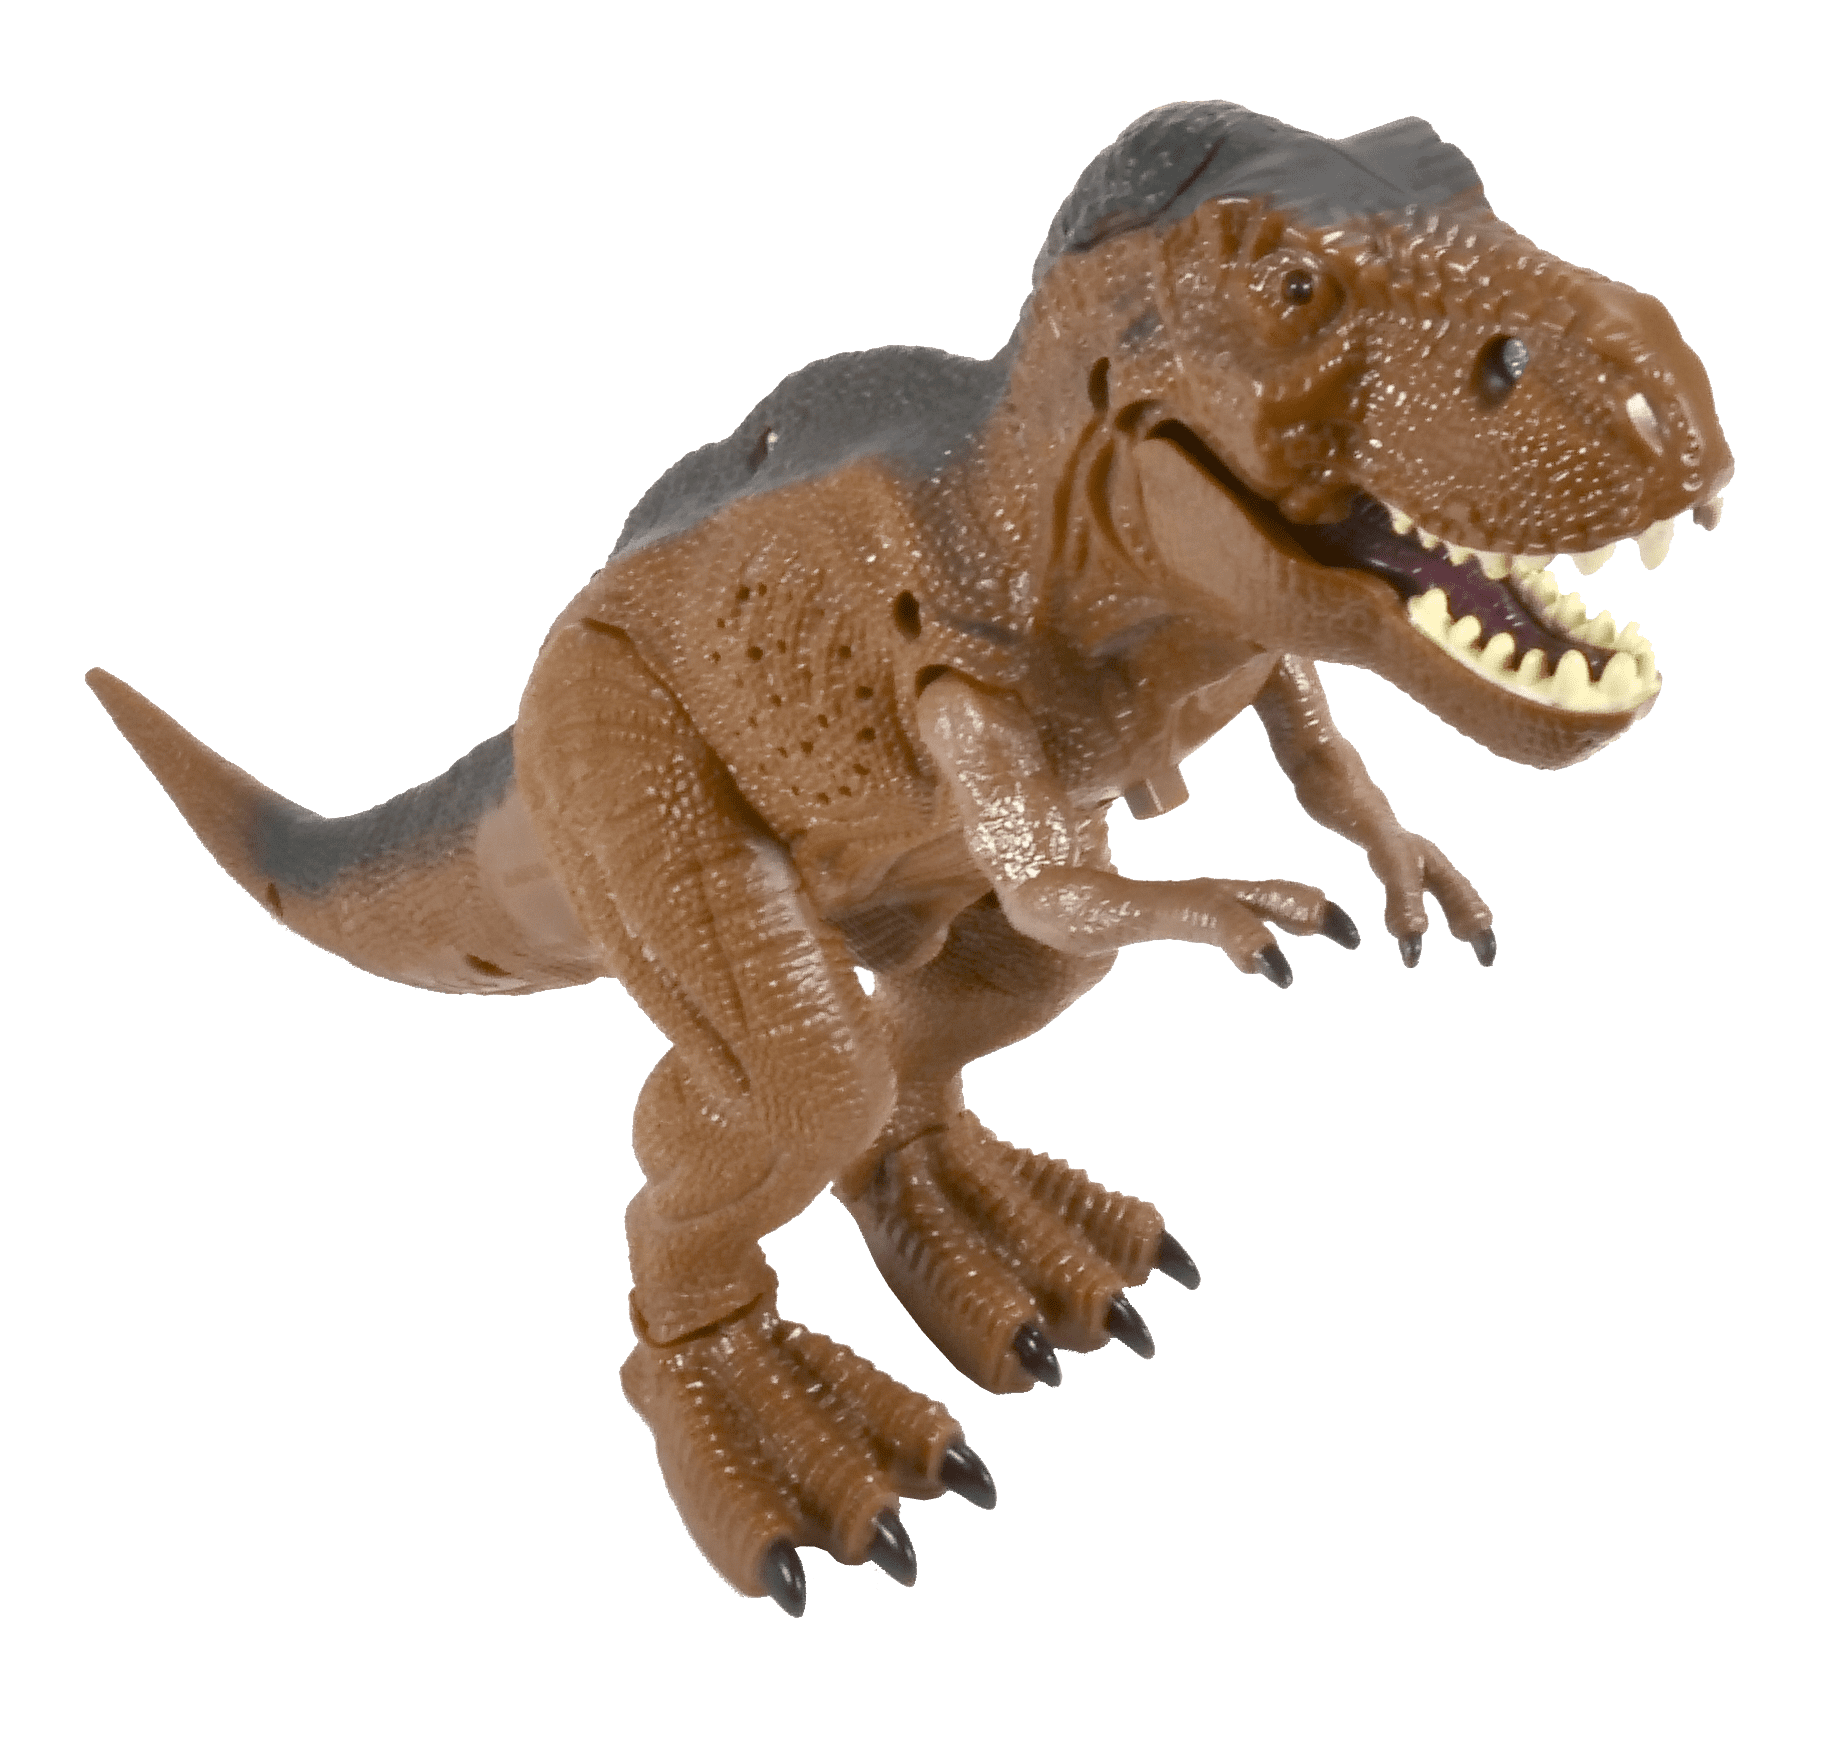 Details about   RC Dinosaur Intelligent Raptor Animal Remote Control Jurassic Dinosaur Toy 